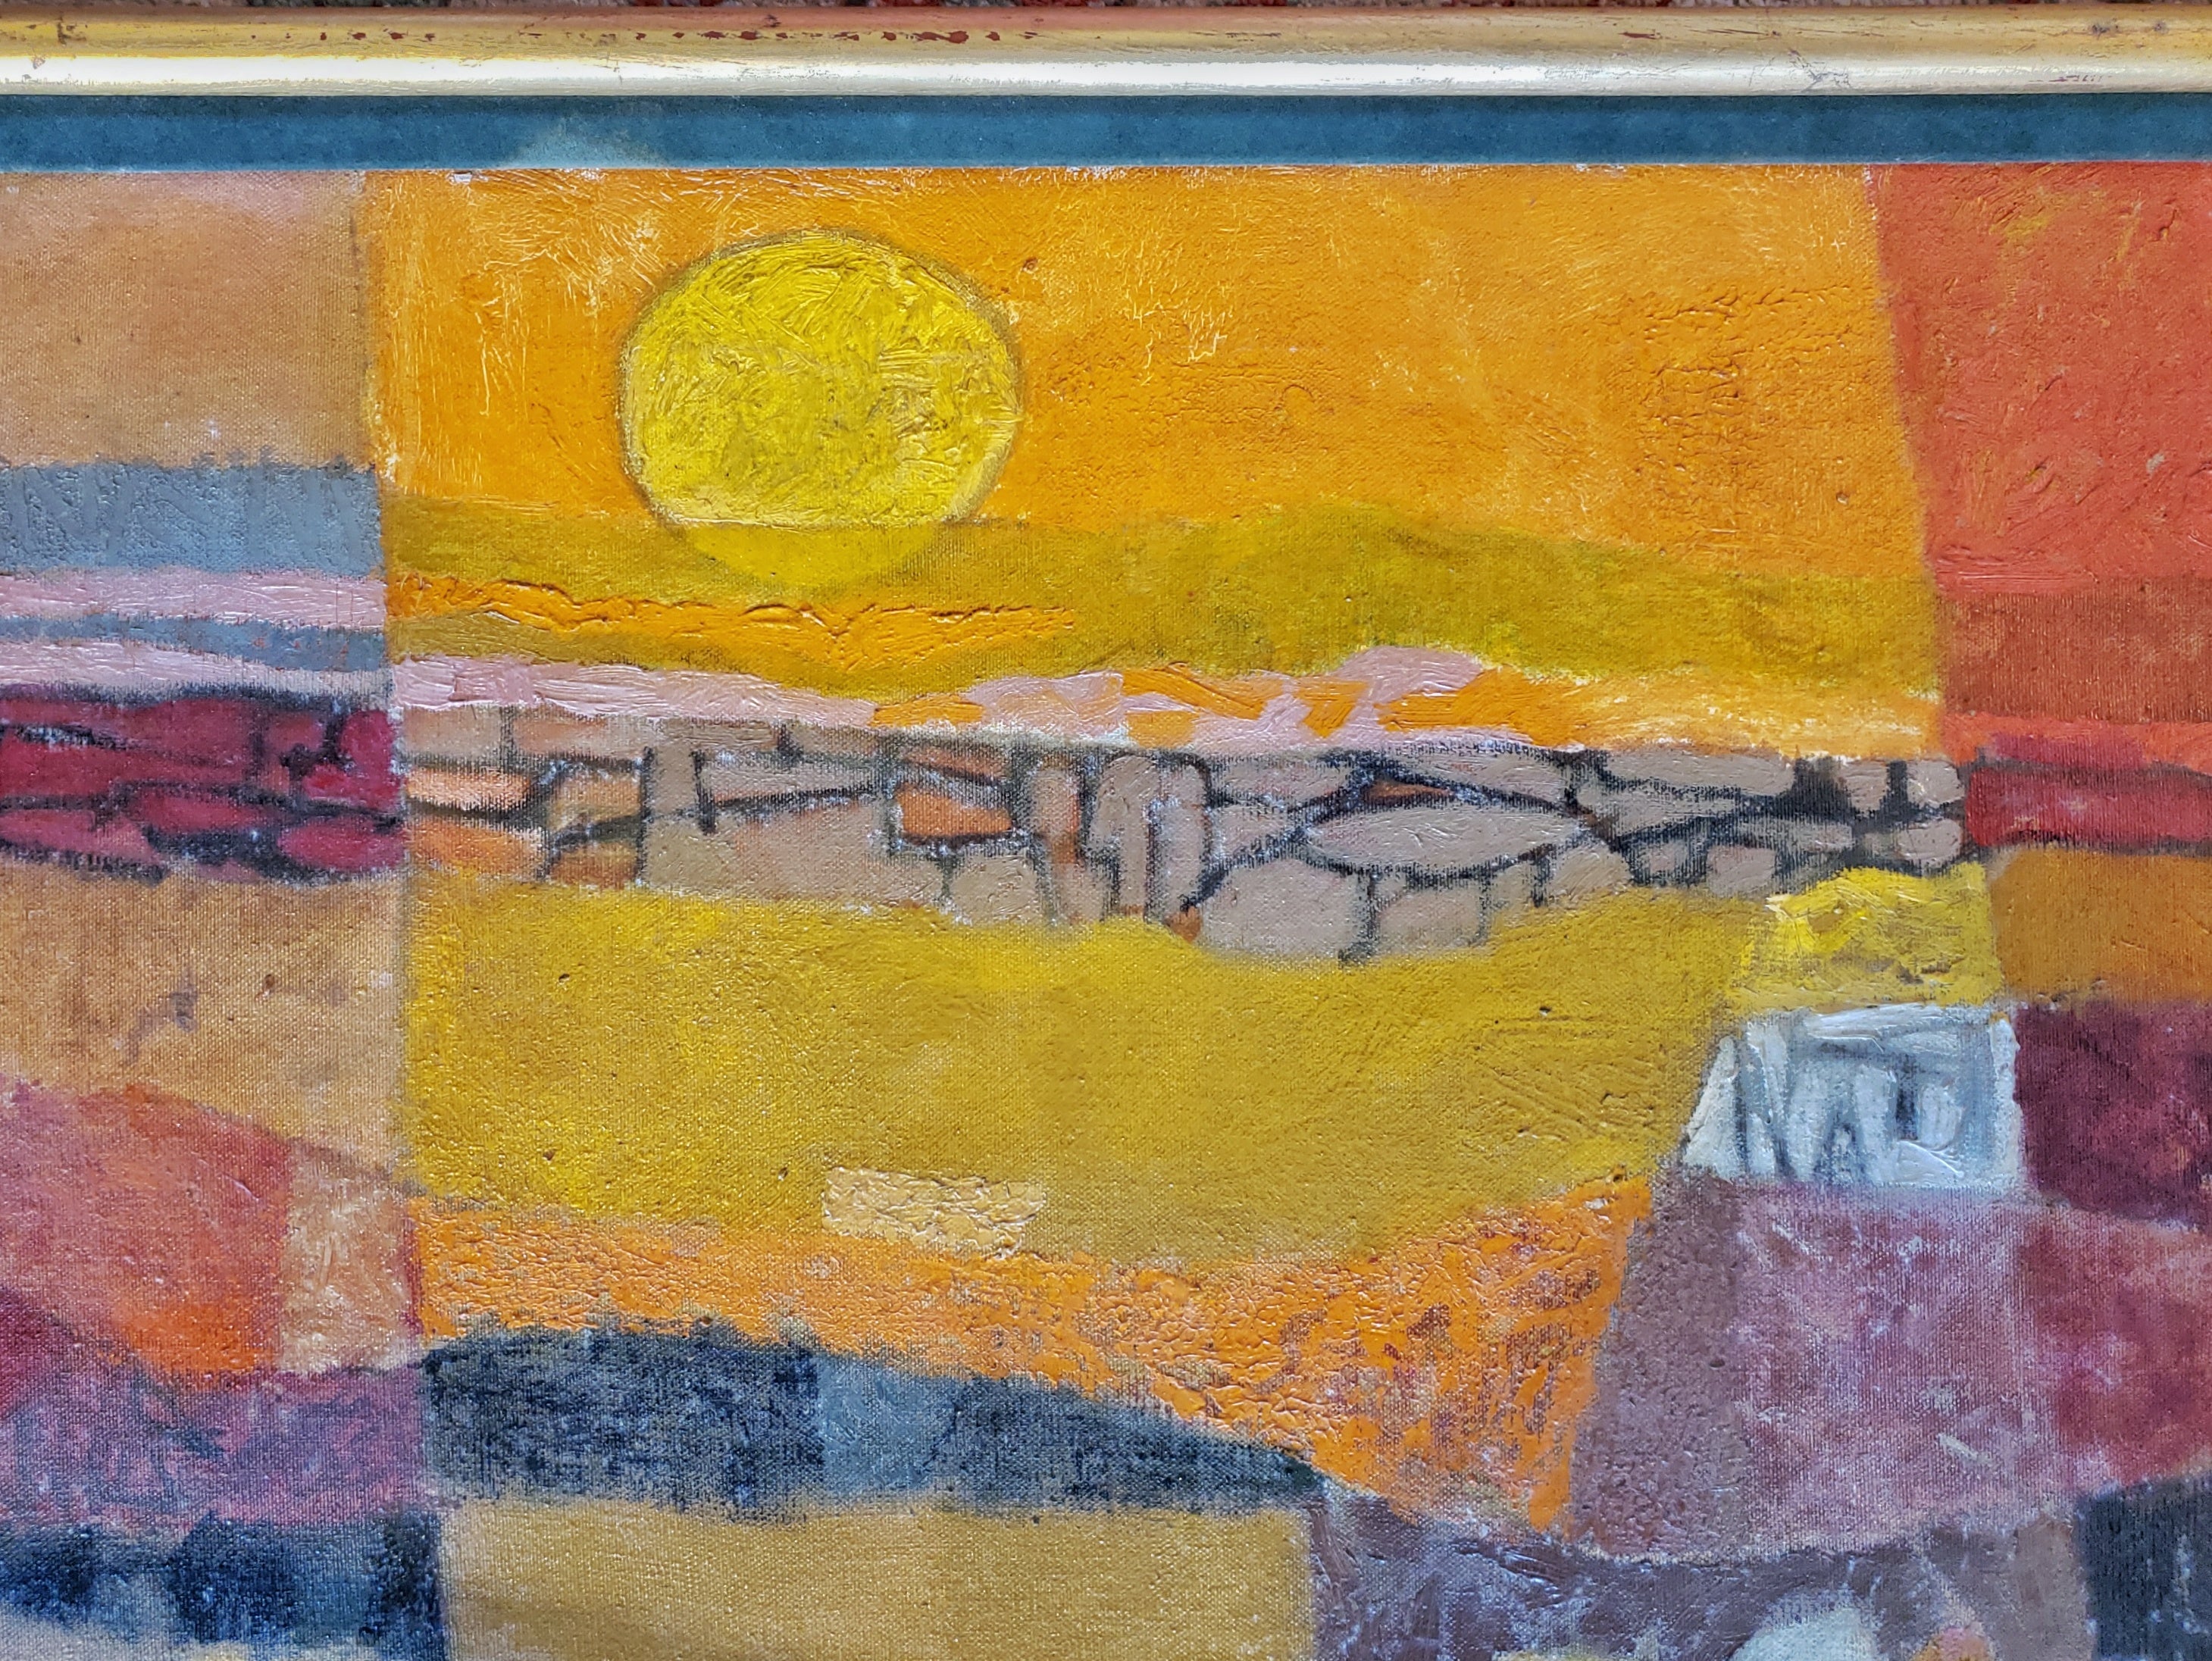 MERRILL MAHAFFEY "DESERT SUNSET"